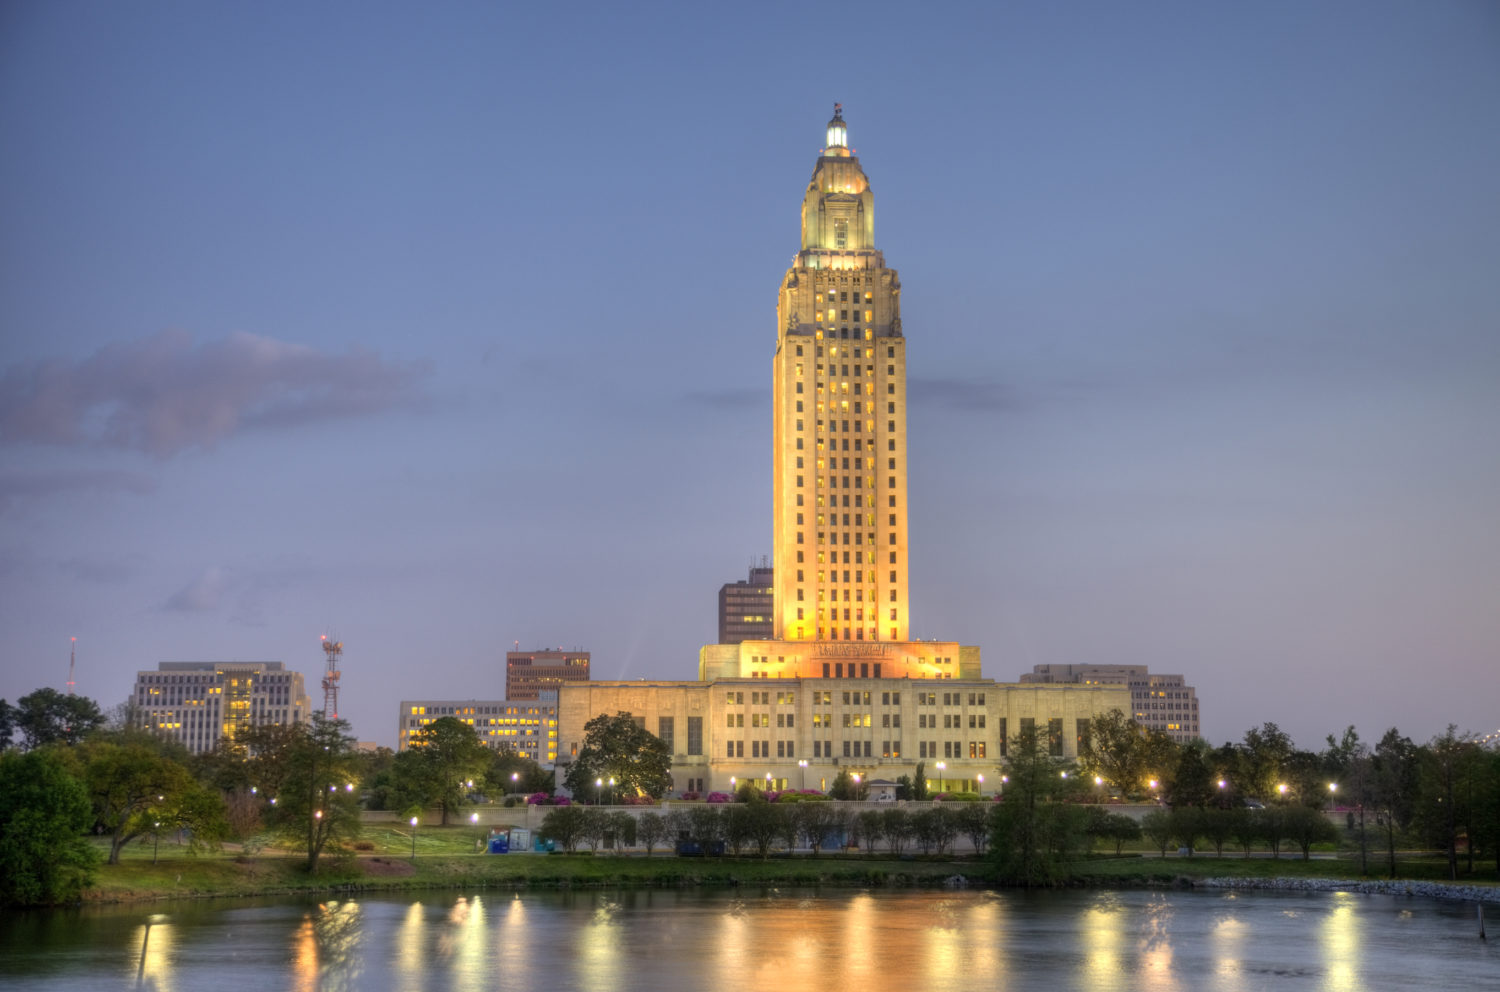 The Louisiana State capitol building in Baton Rouge, Louisiana.